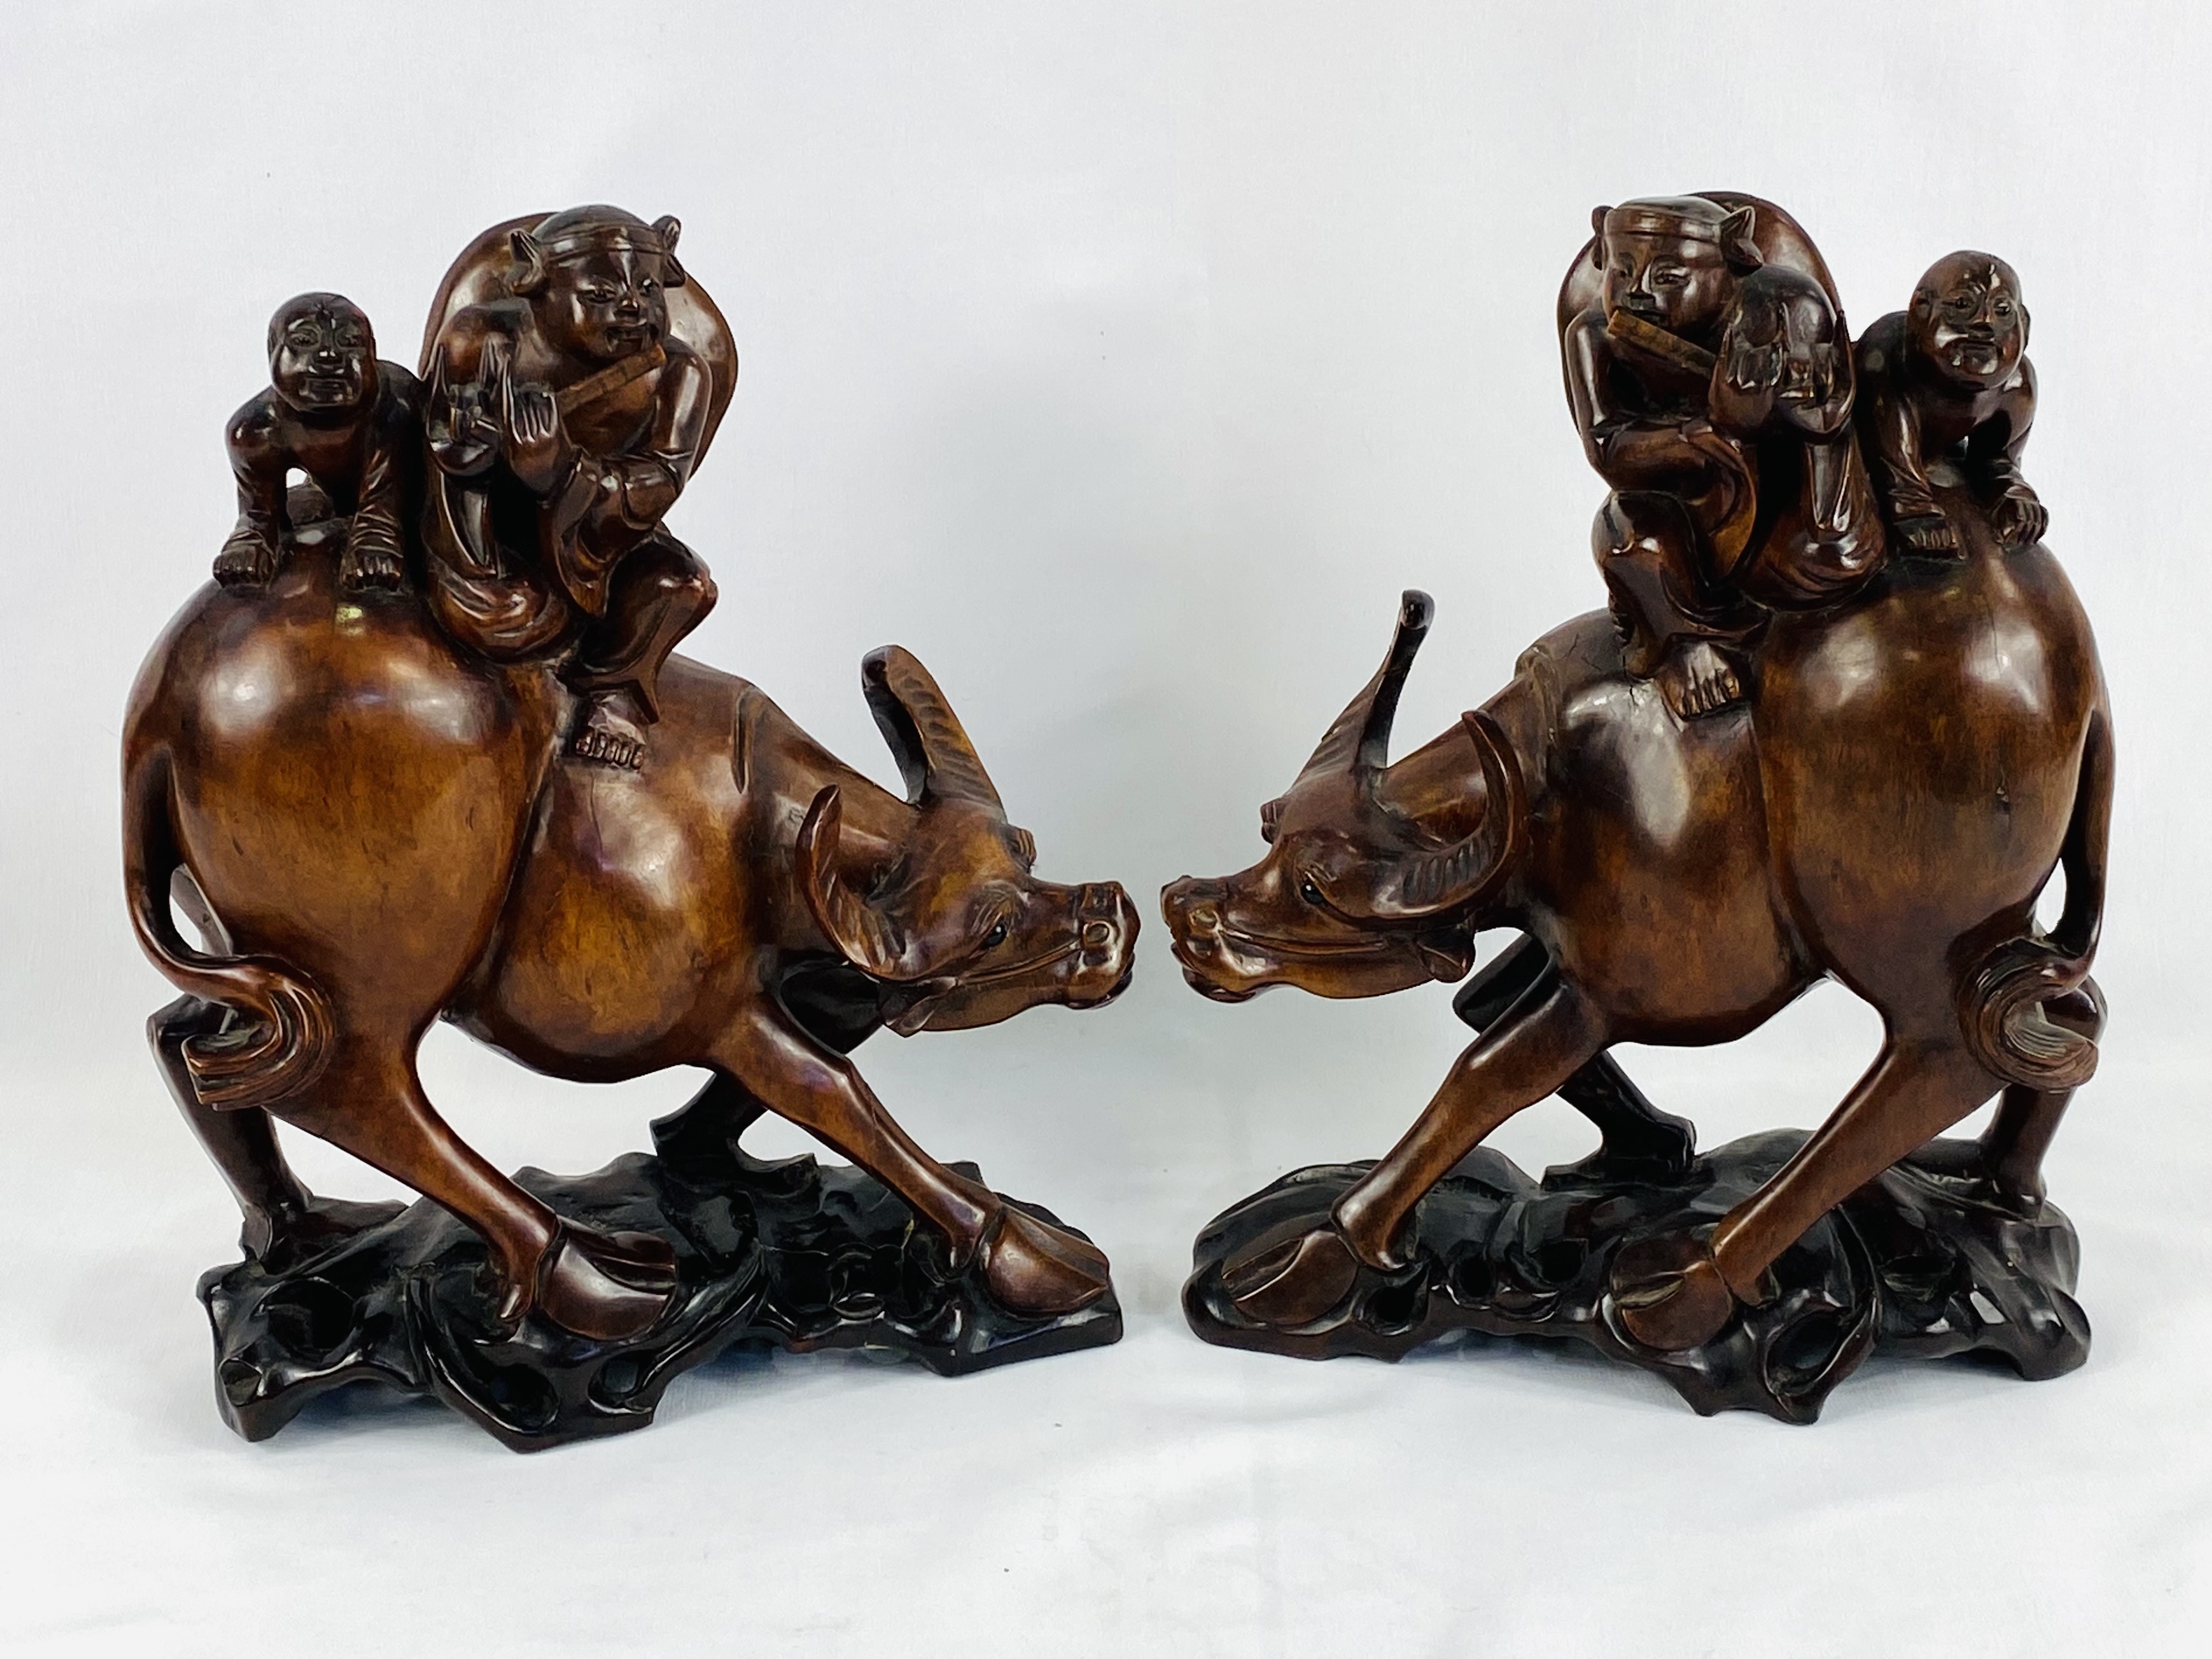 Pair of carved wood figures